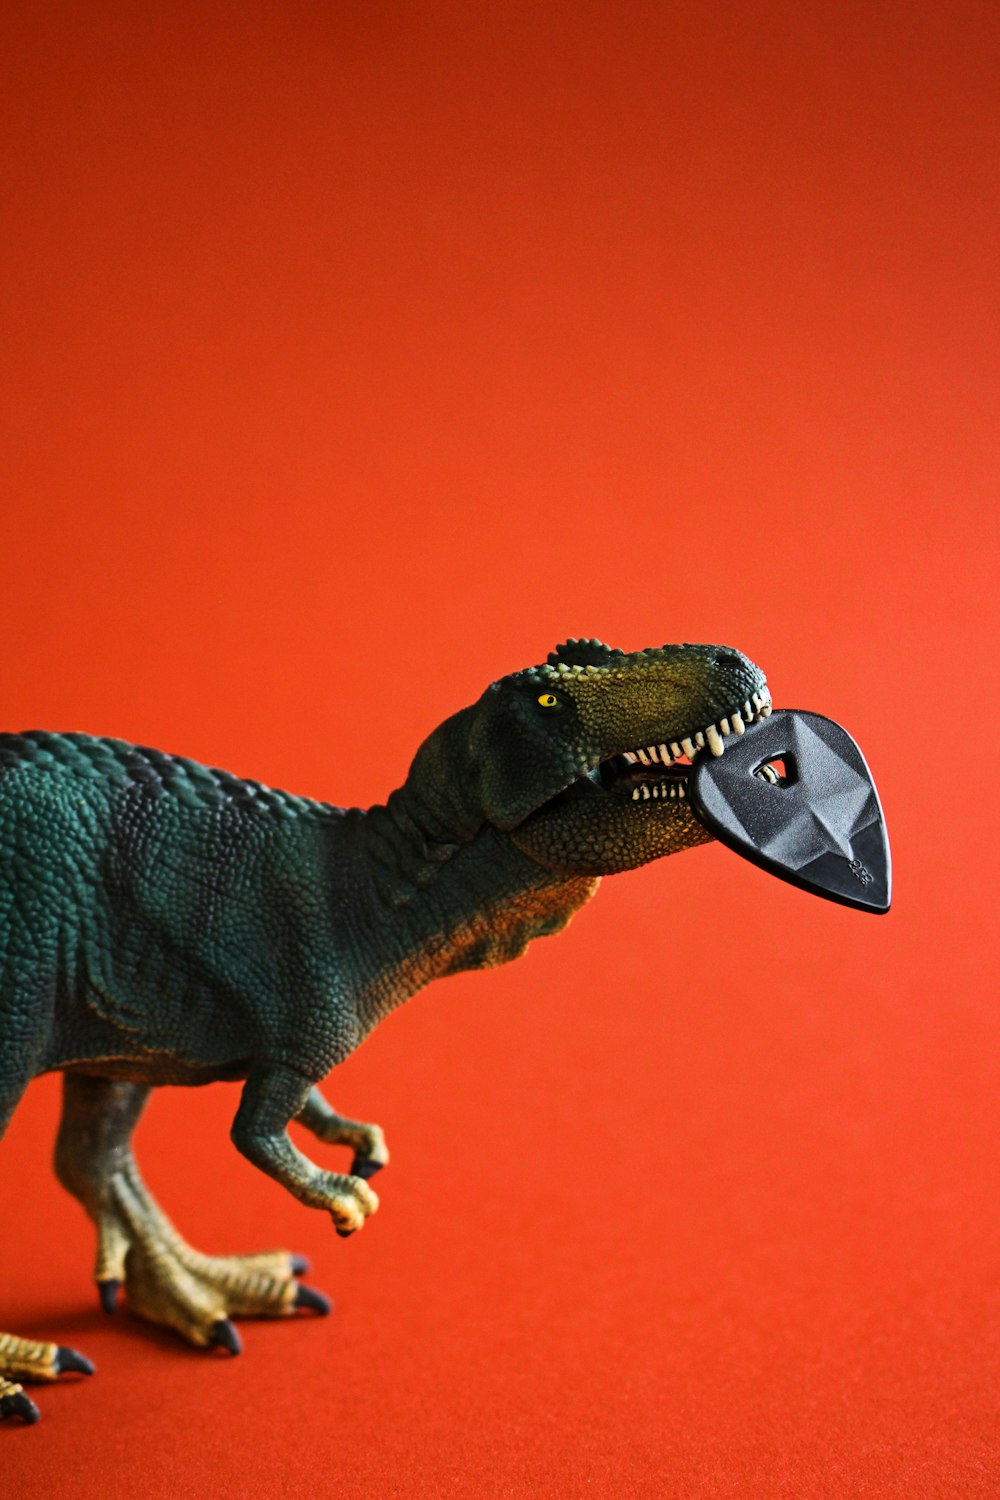 green and black dinosaur plastic toy